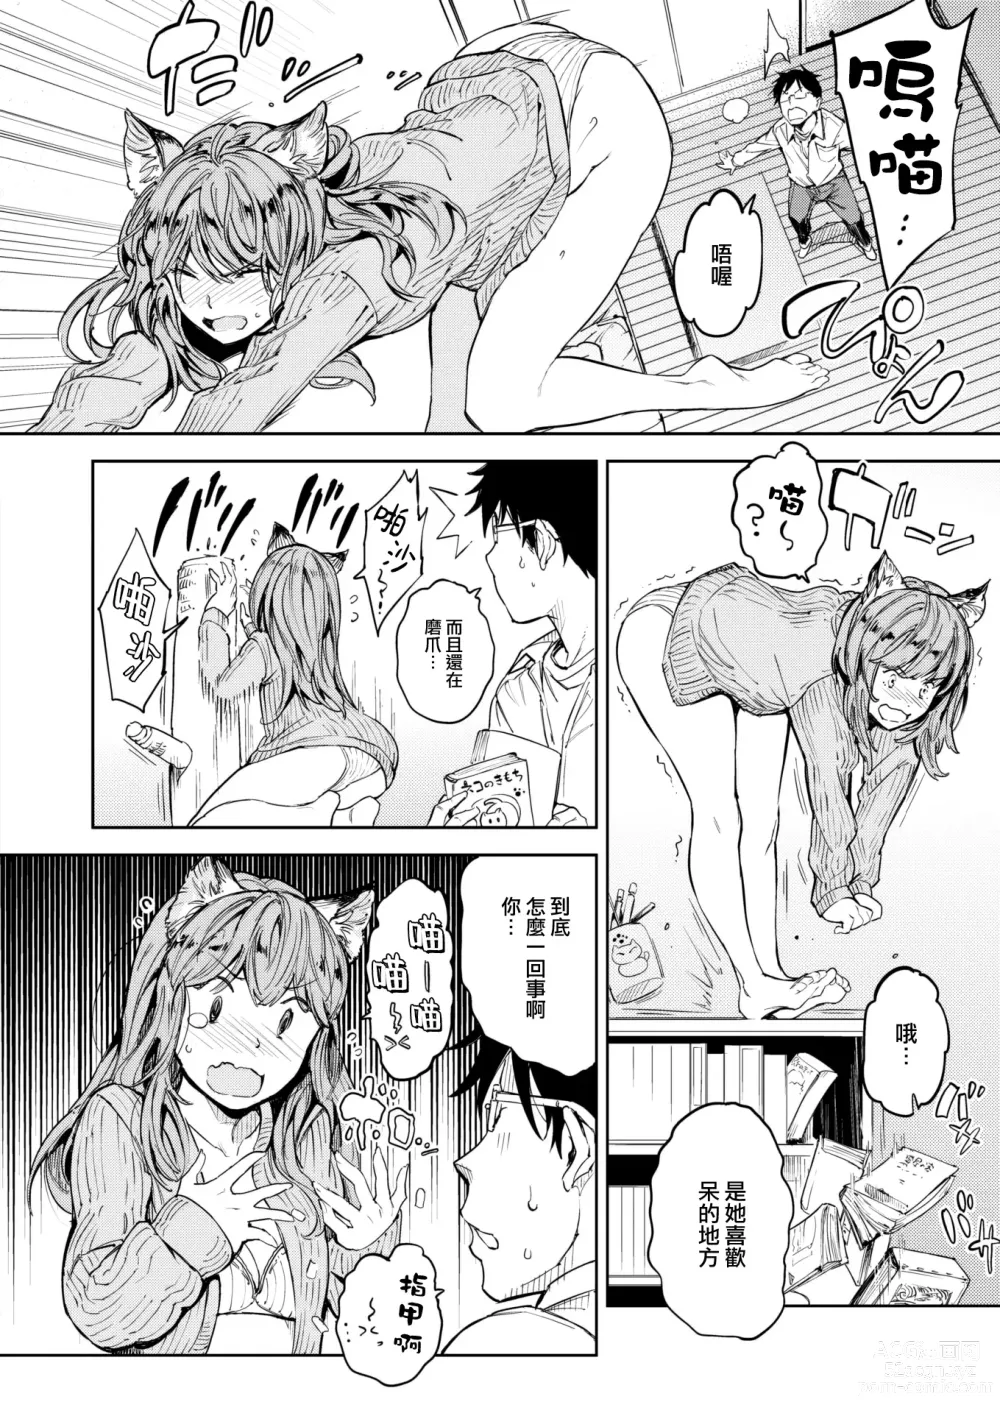 Page 7 of manga Gal Neko